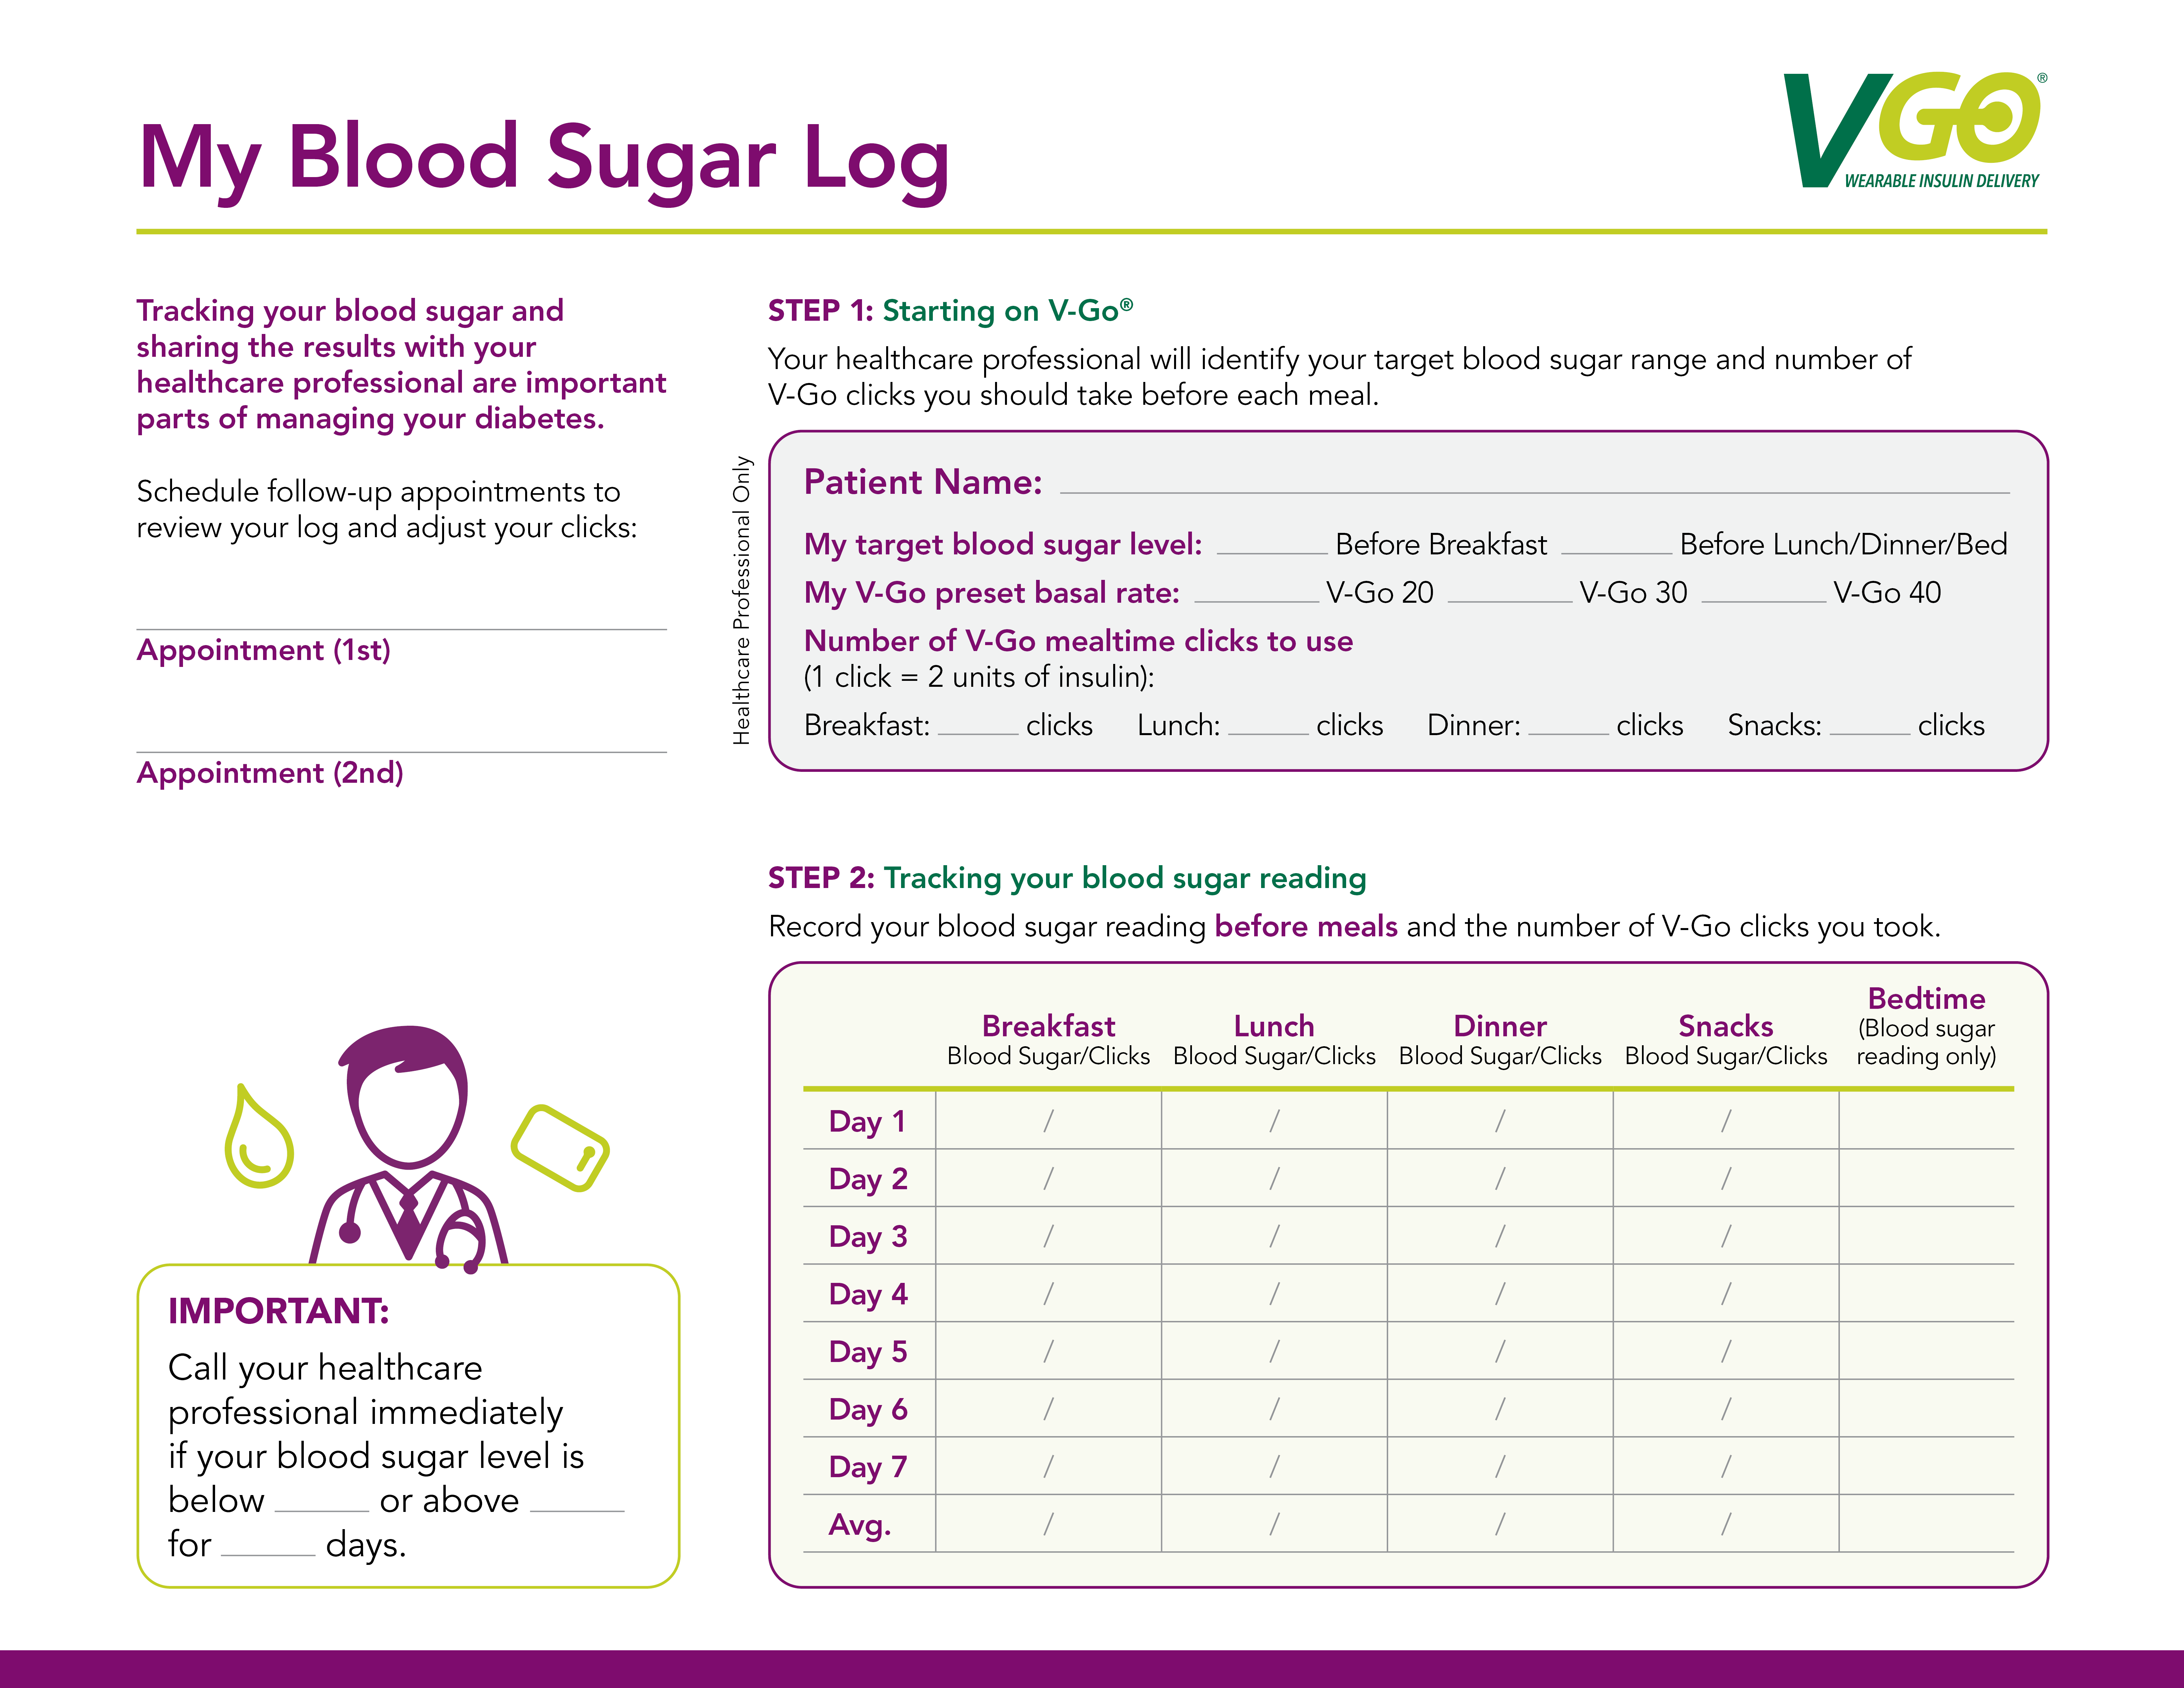 US-VGO-006 Rev A. Patient_Blood_Sugar_Log 11.27.22